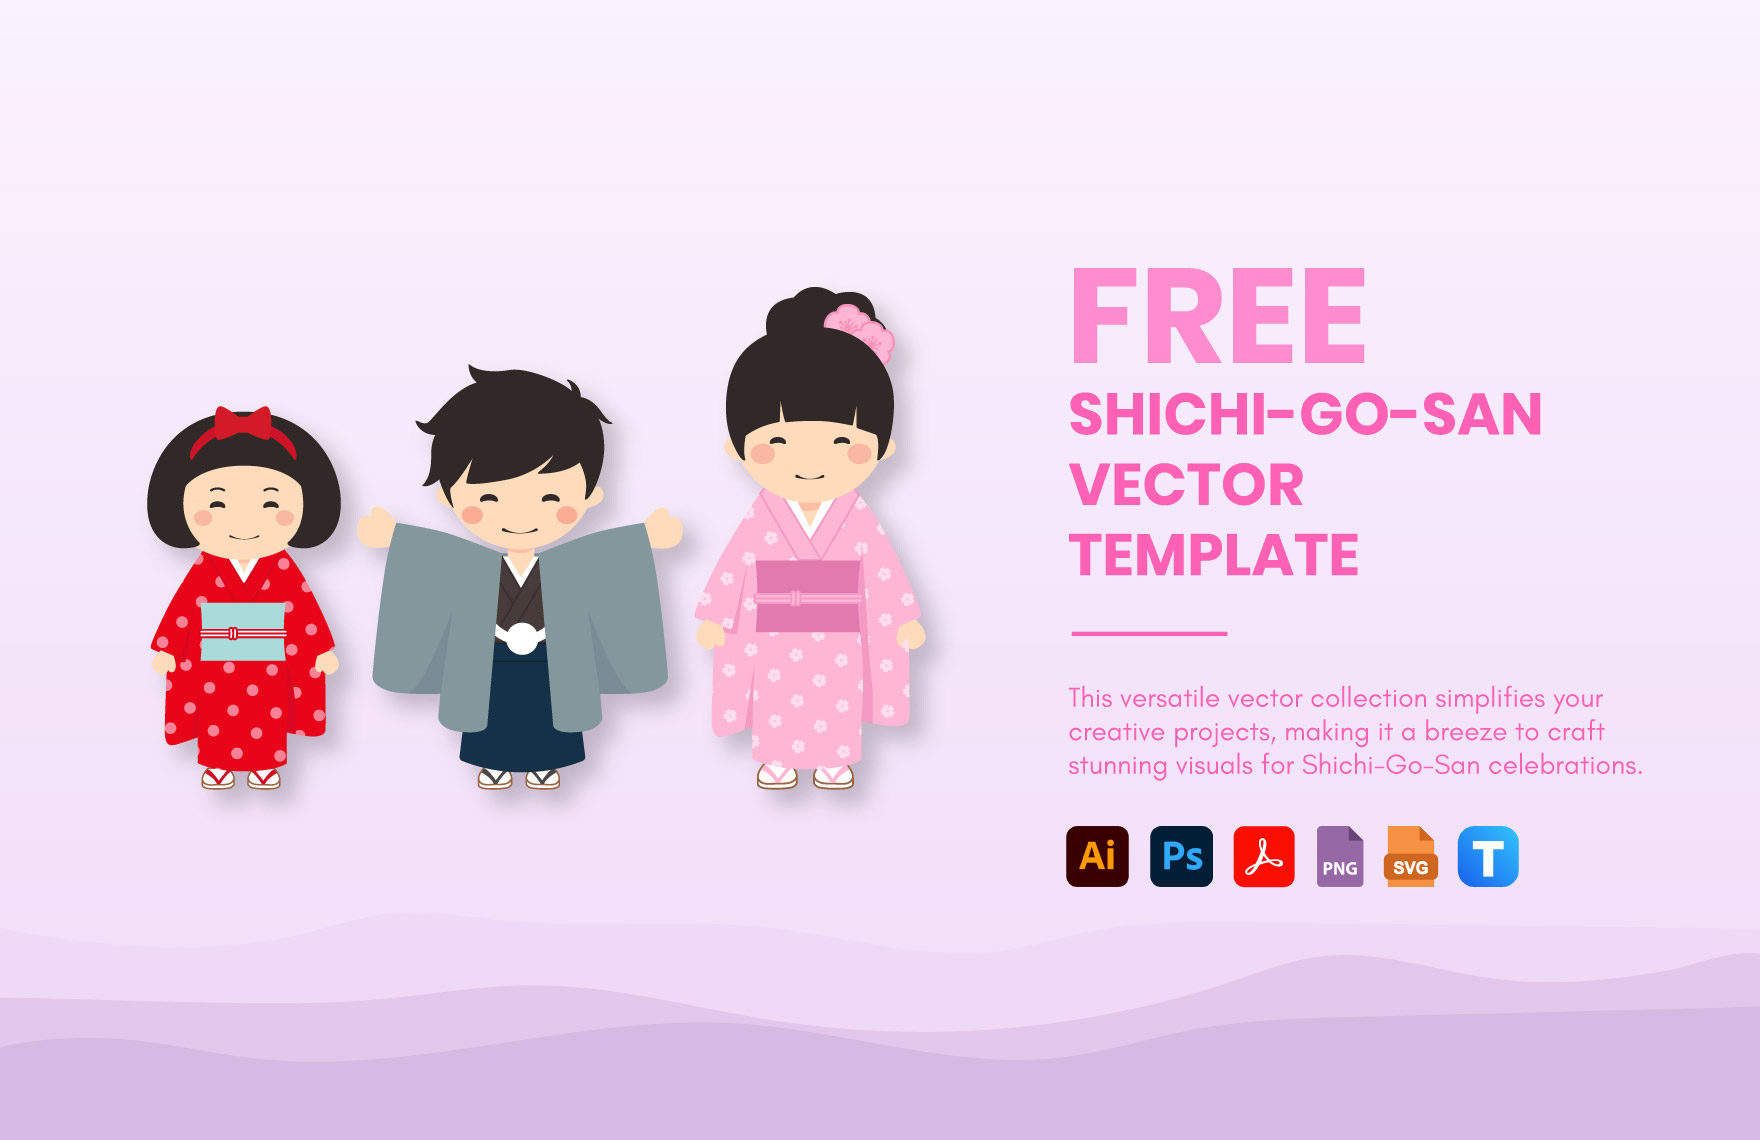 Free Shichi-Go-San Vector in PDF, Illustrator, PSD, SVG, PNG